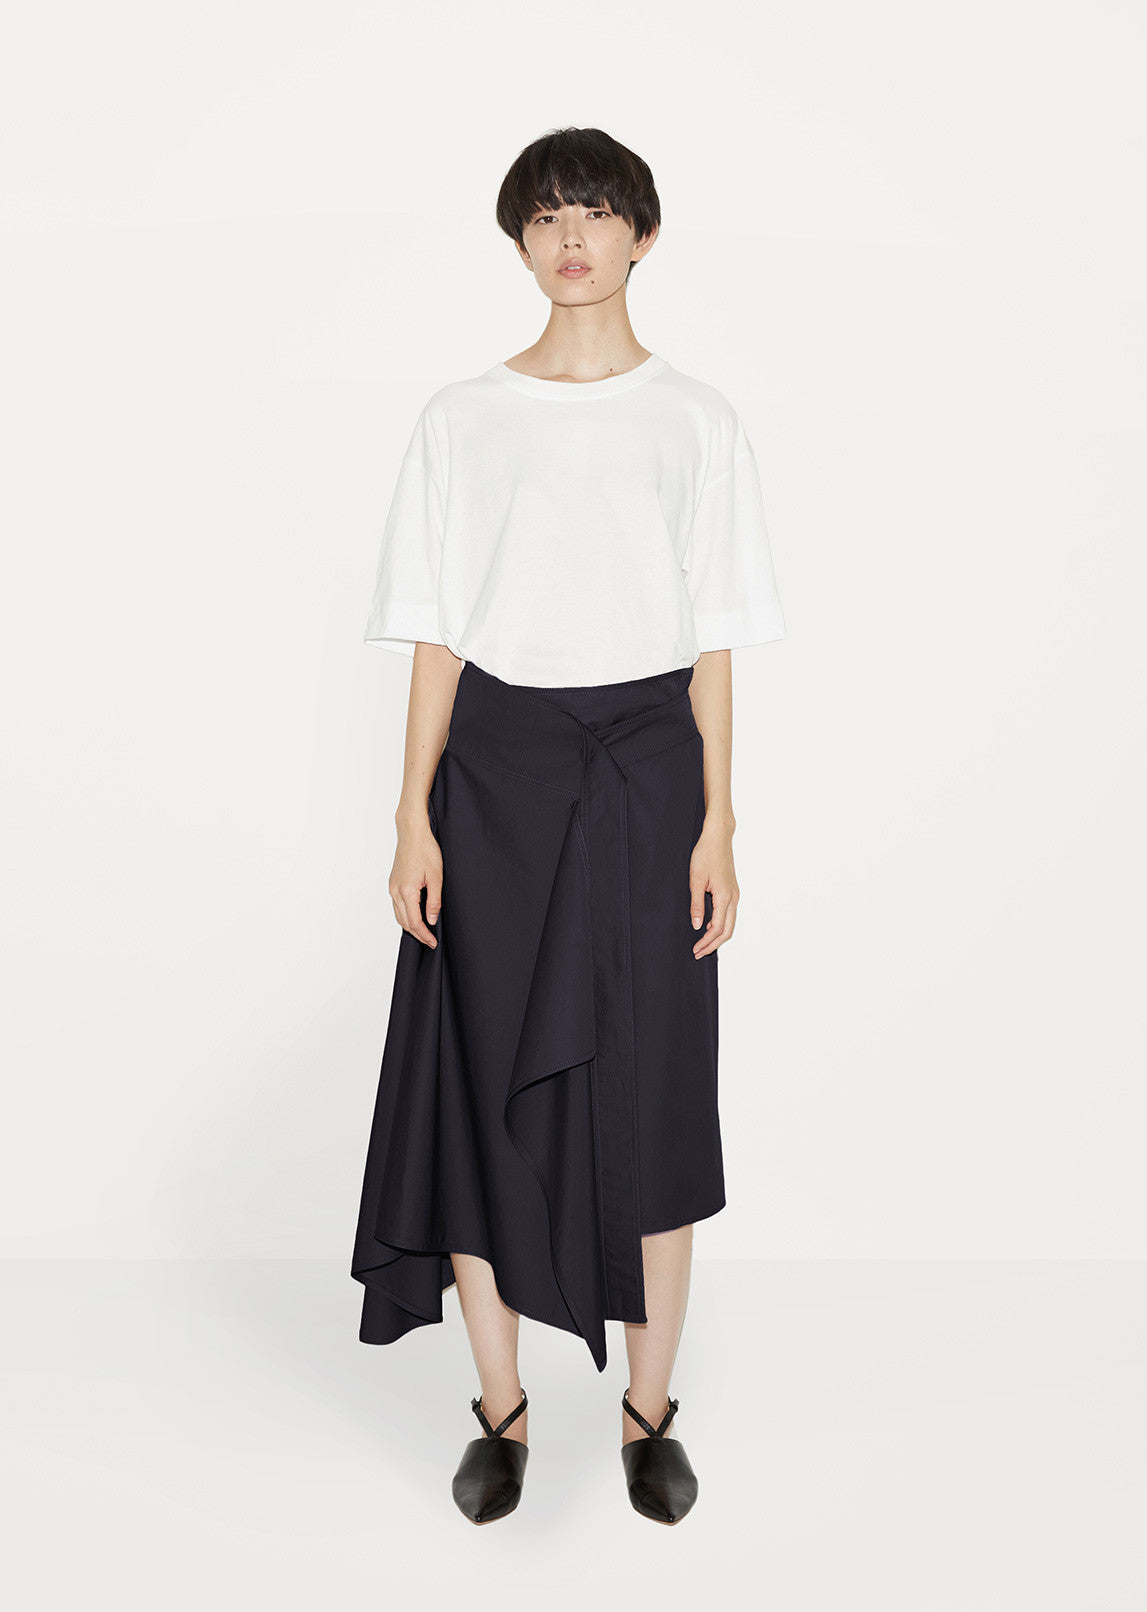 Asymmetrical Skirt by Marni - La Garçonne